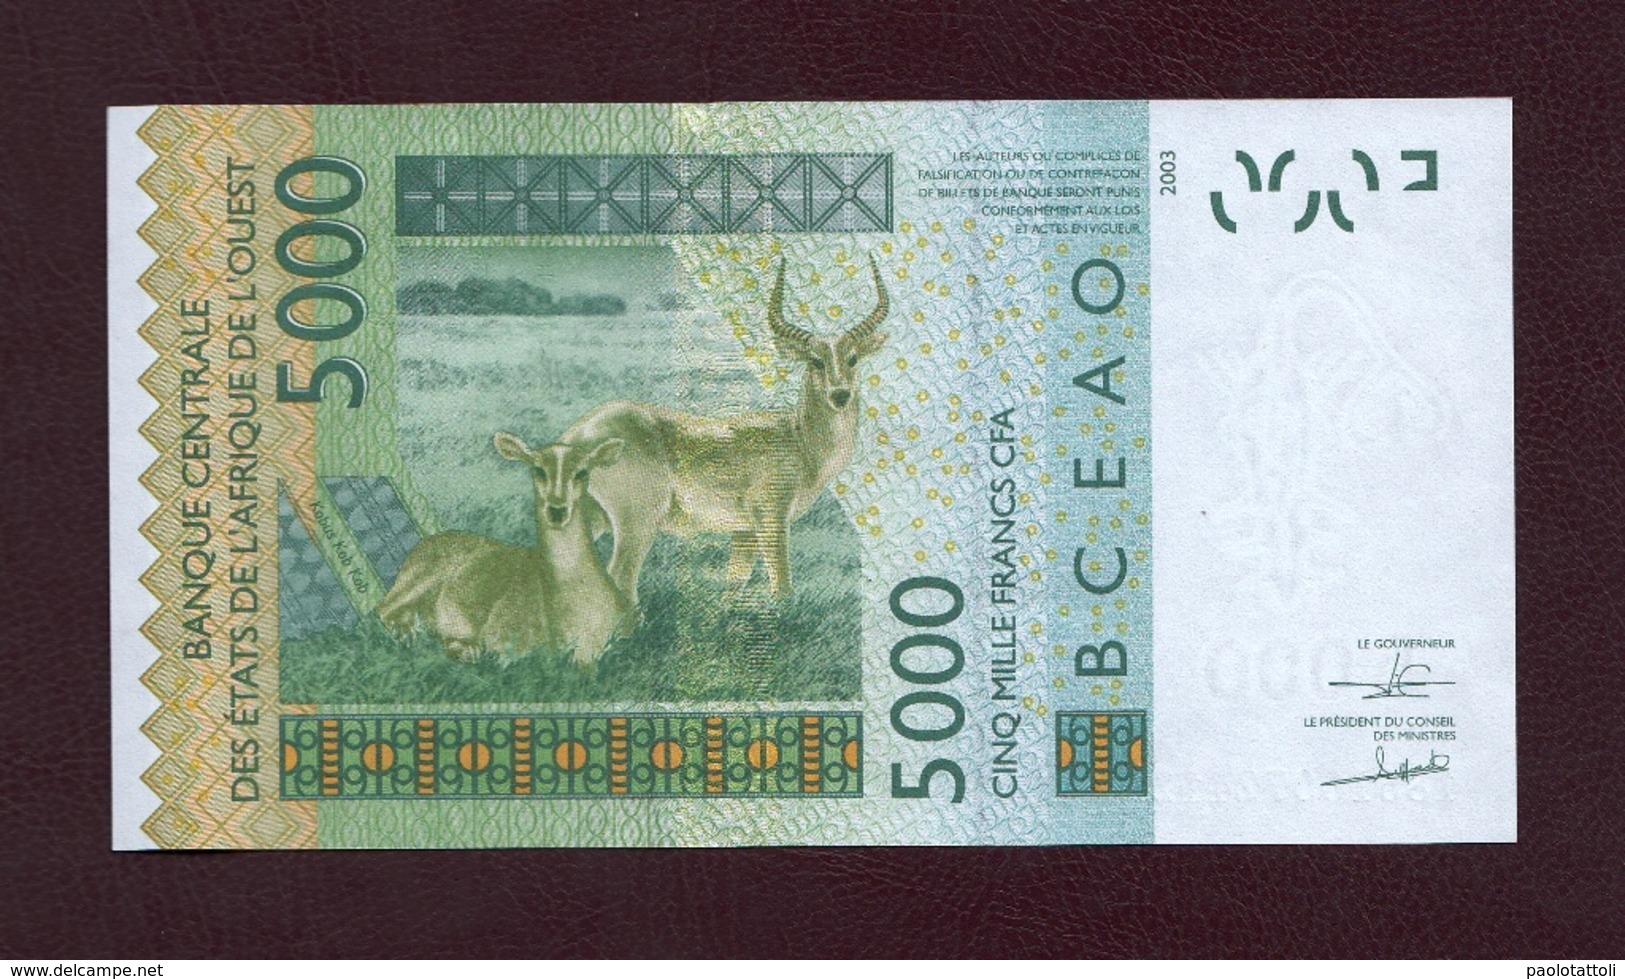 Senegal, 2003. Banque Centrale Des Etats De L'Afrique Del' Ouest. 5000 Francs CFA. - Senegal